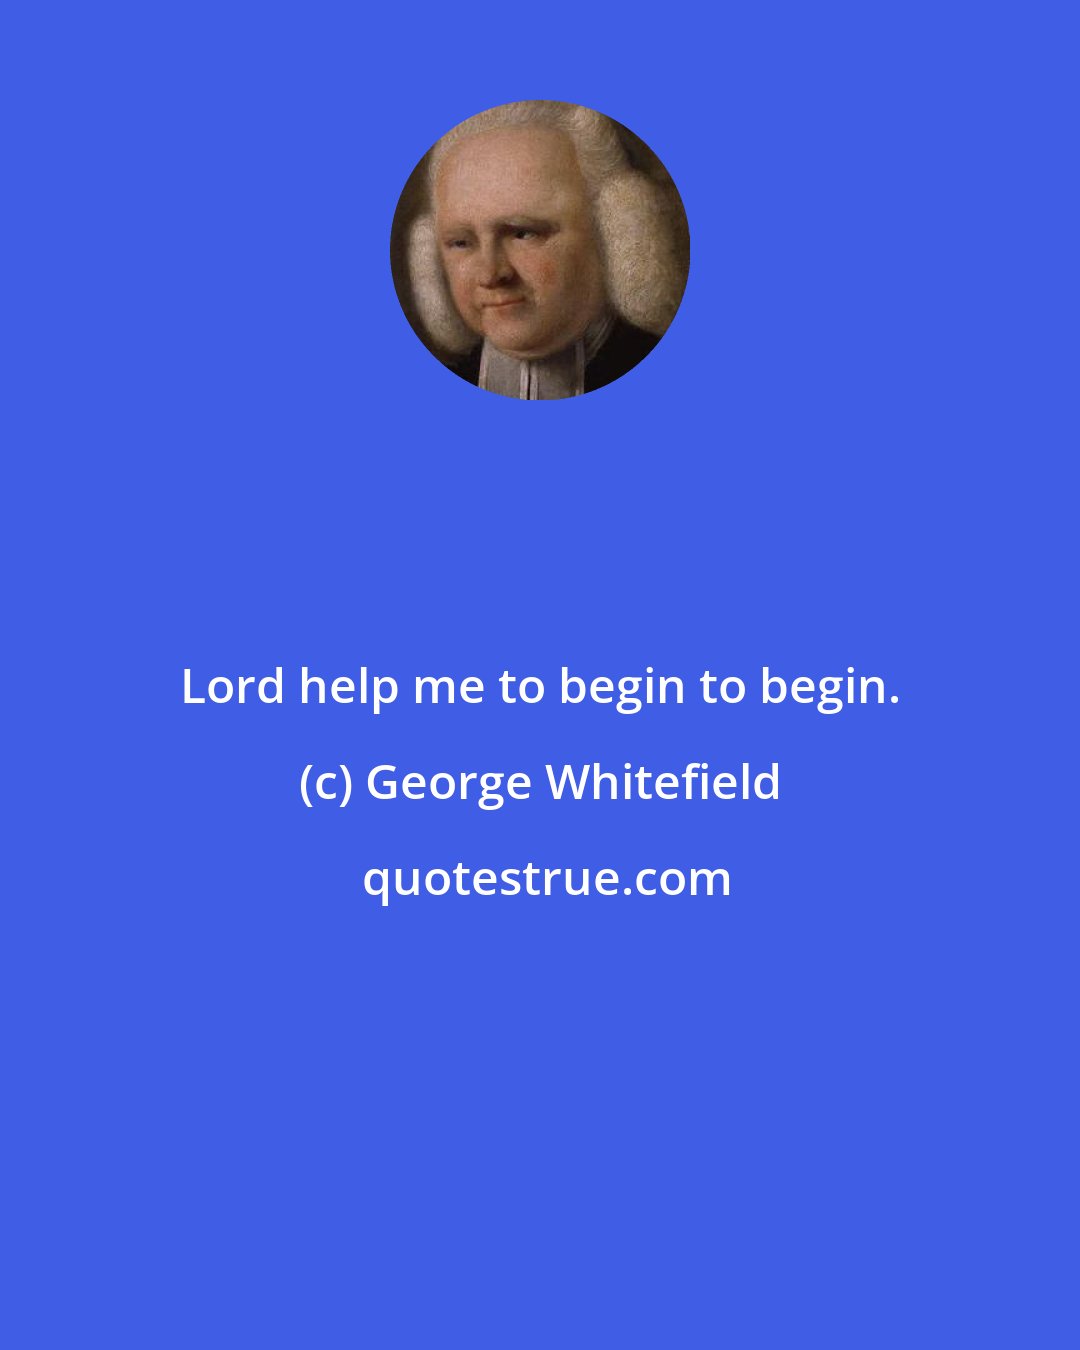 George Whitefield: Lord help me to begin to begin.